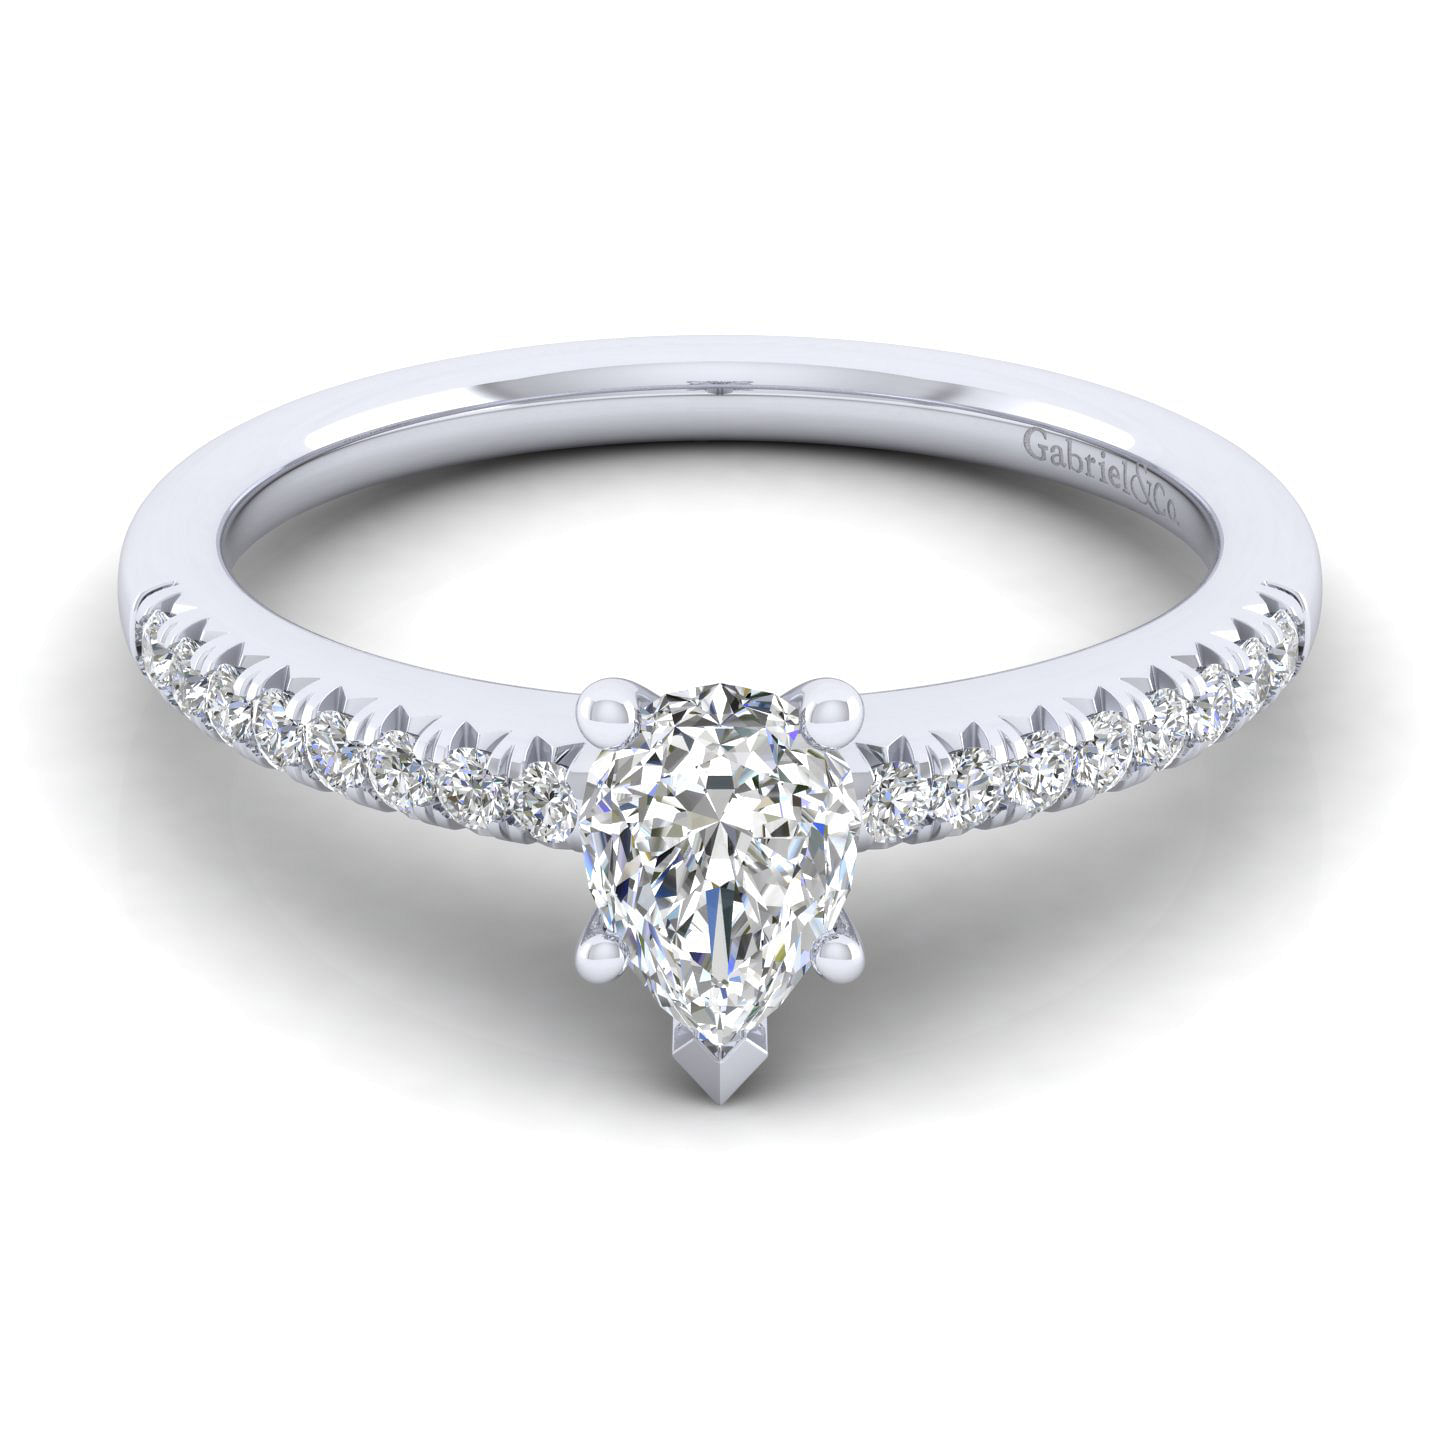 Kelly - 14K White Gold Pear Shape Diamond Engagement Ring